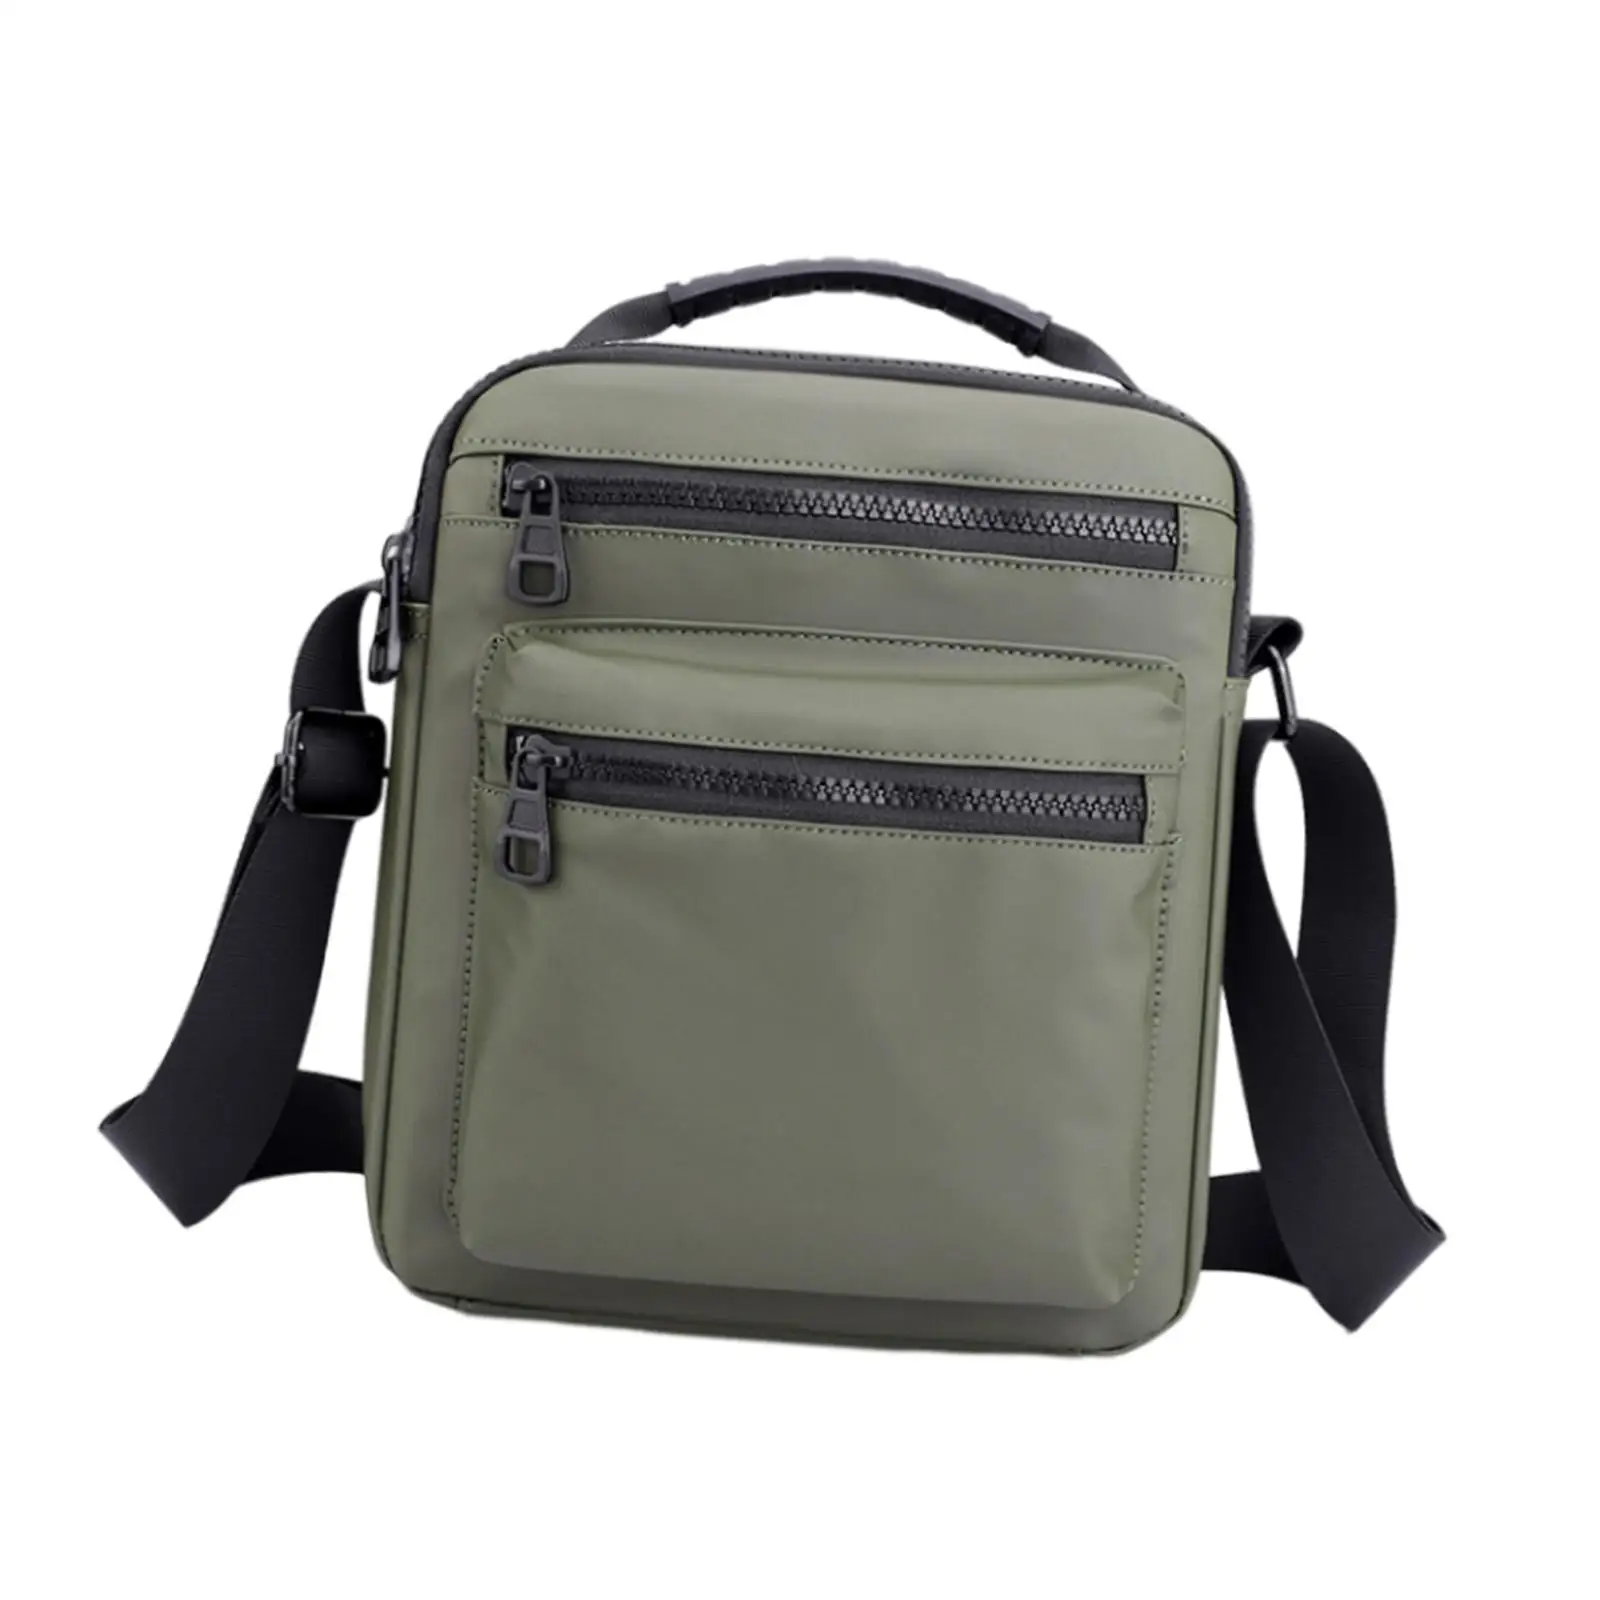 Men`s Messenger Bag Lightweight Gift for Family Friends Handbag Shoulder Bags for Backpacking Daily Use Picnic Biking Adults